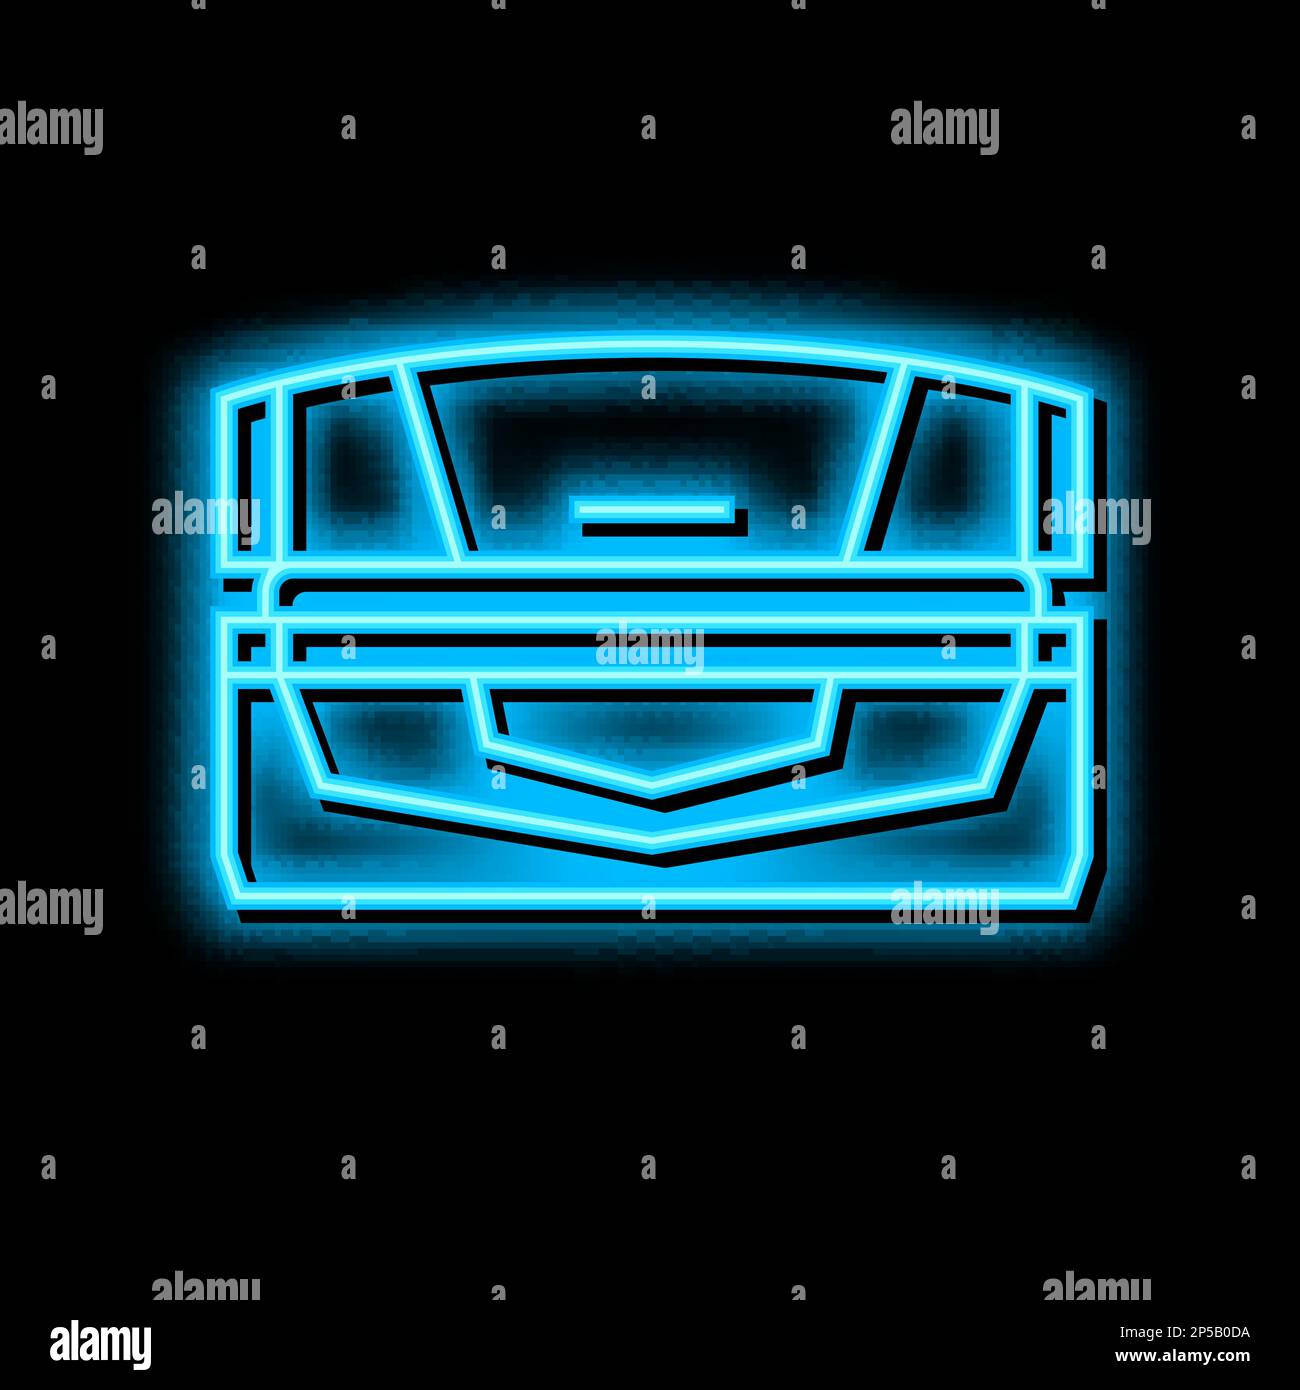 horizontal closed cabin solarium equipment neon glow icon illustration Stock Vector